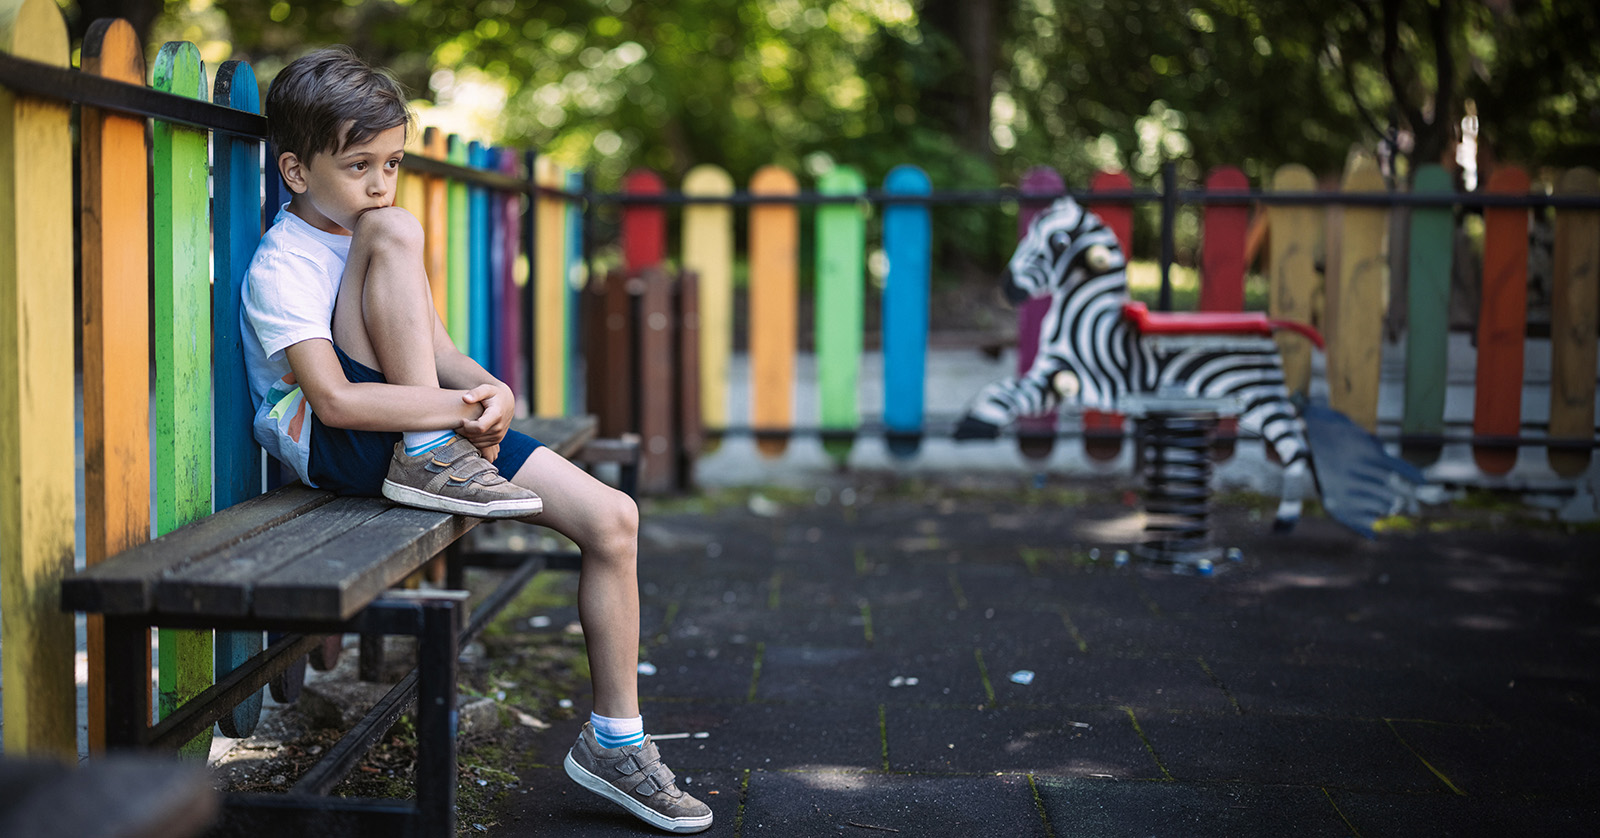 Child sitting alone on a playground bench.